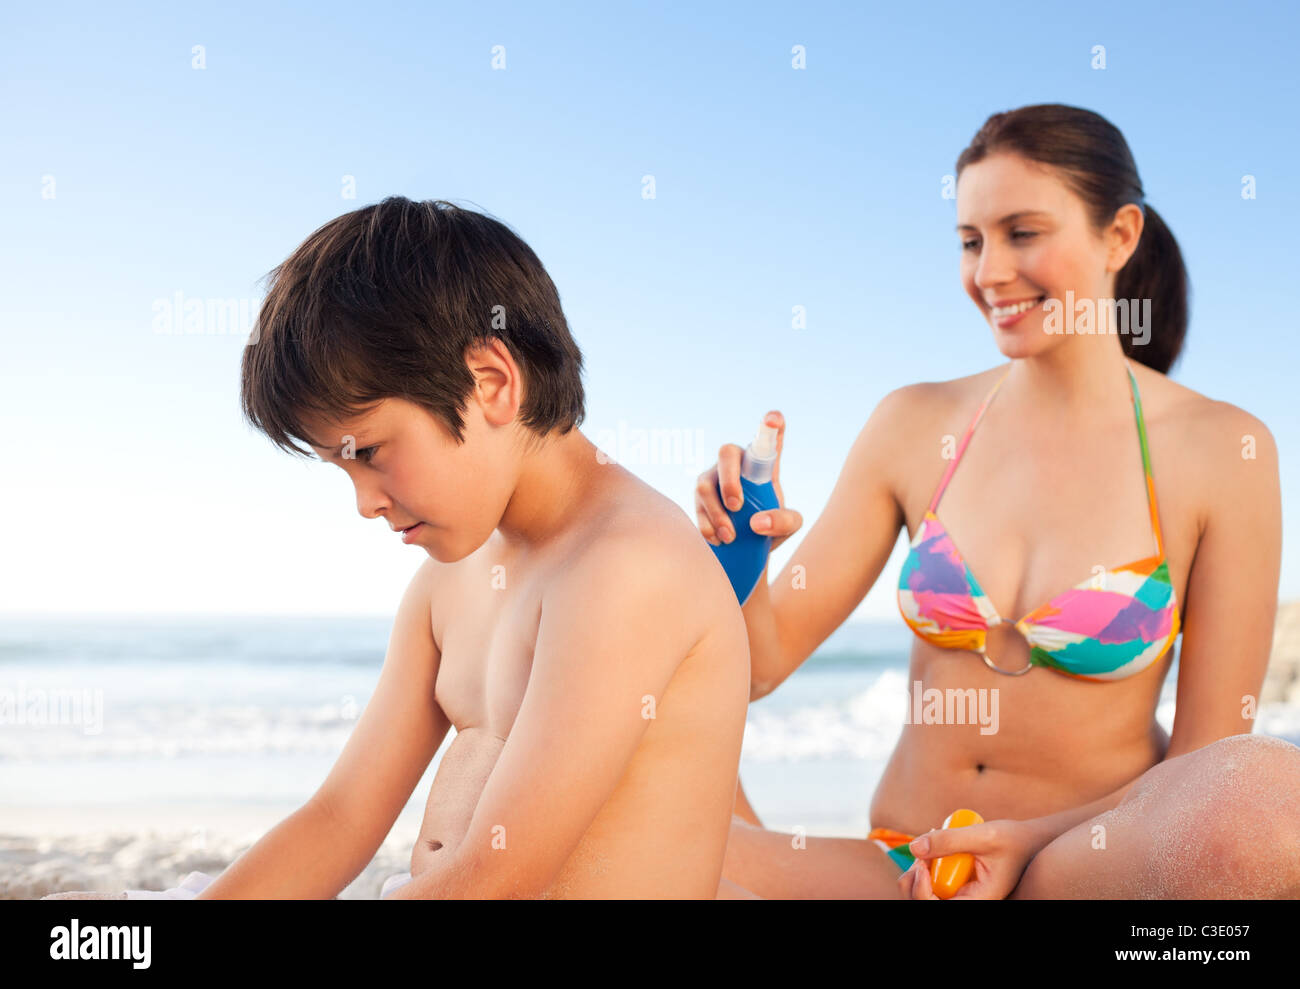 сын на пляже голым фото 49